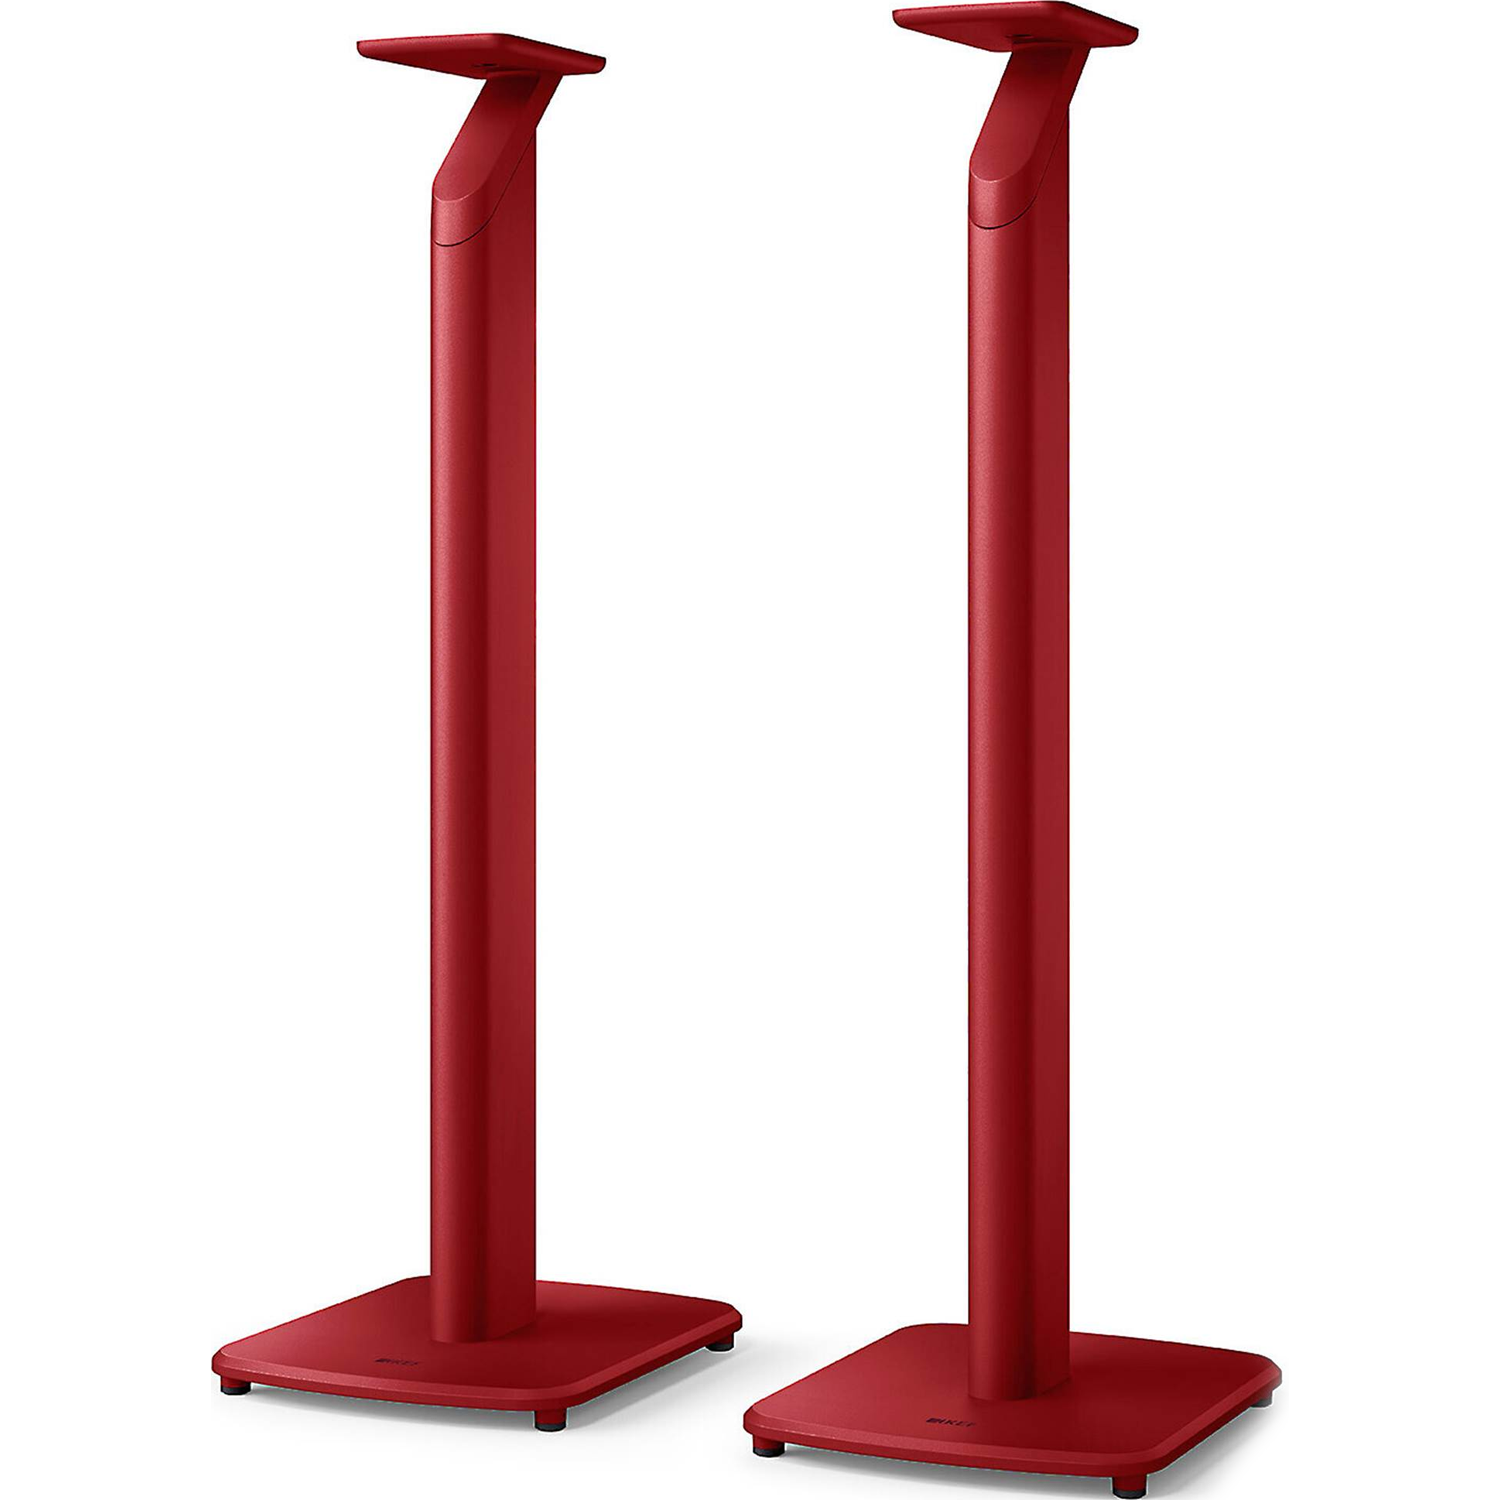 KEF S1 PAIR Floorstands for LSX Speakers Red